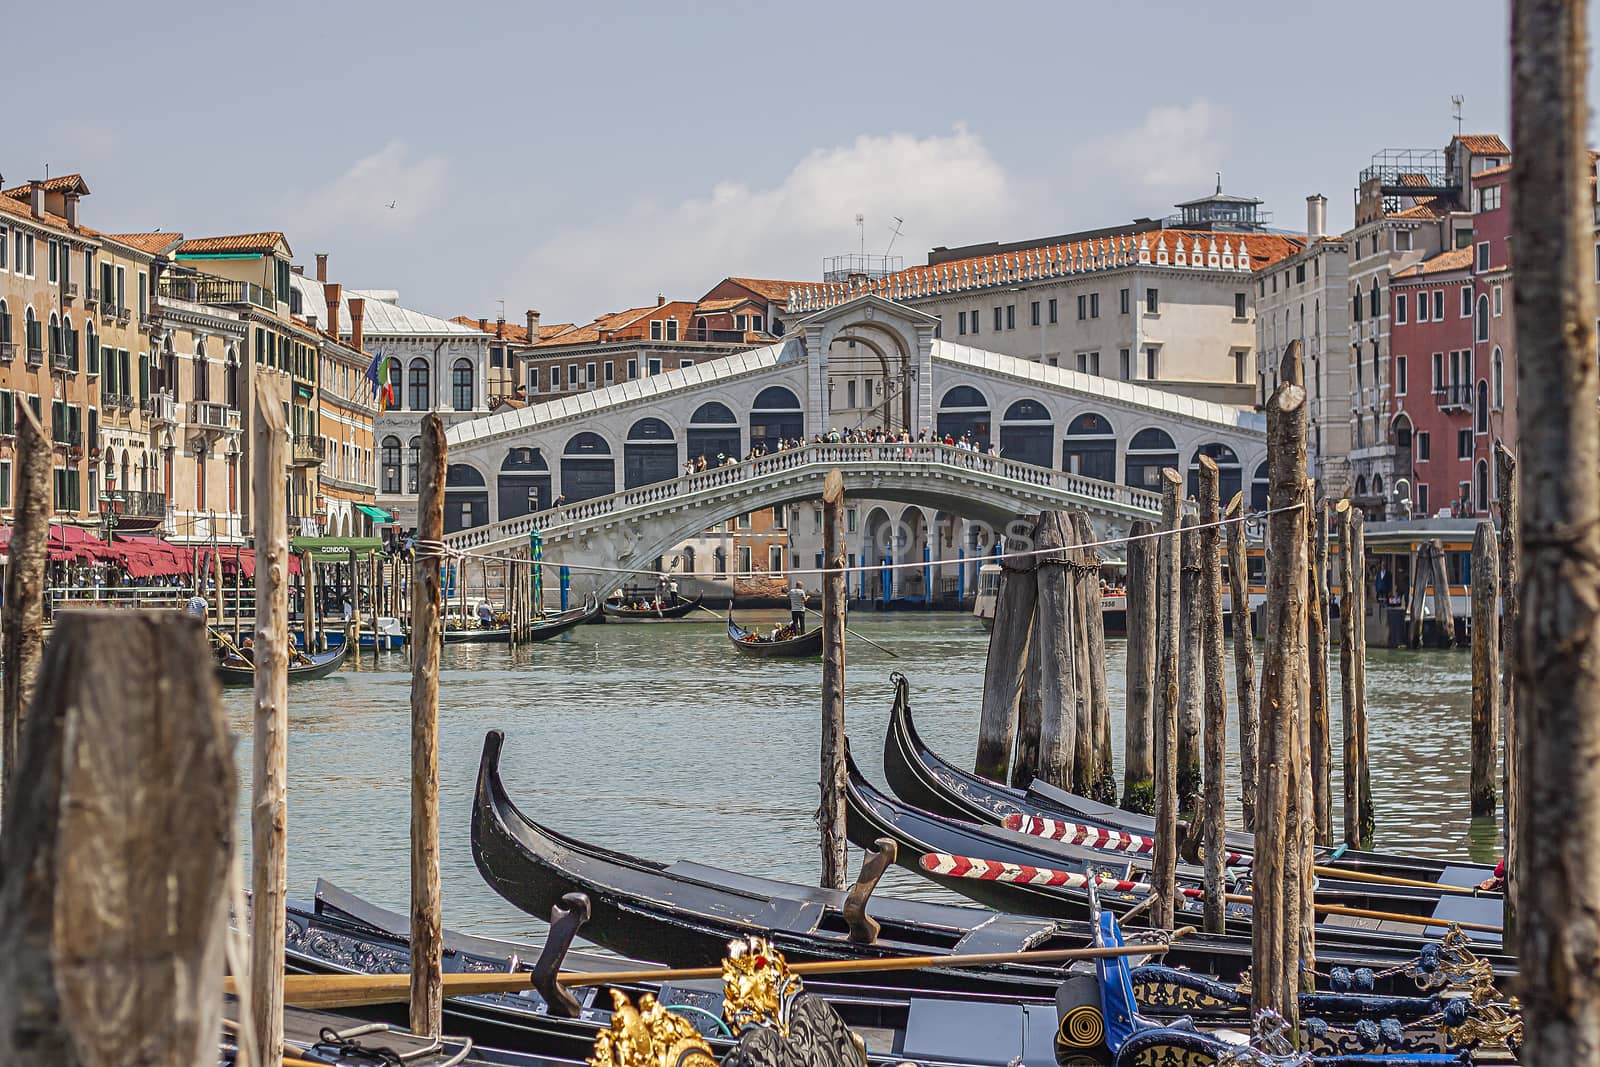 VENICE, ITALY 2 JULY 2020: Rialto bridge in Venice in Italy